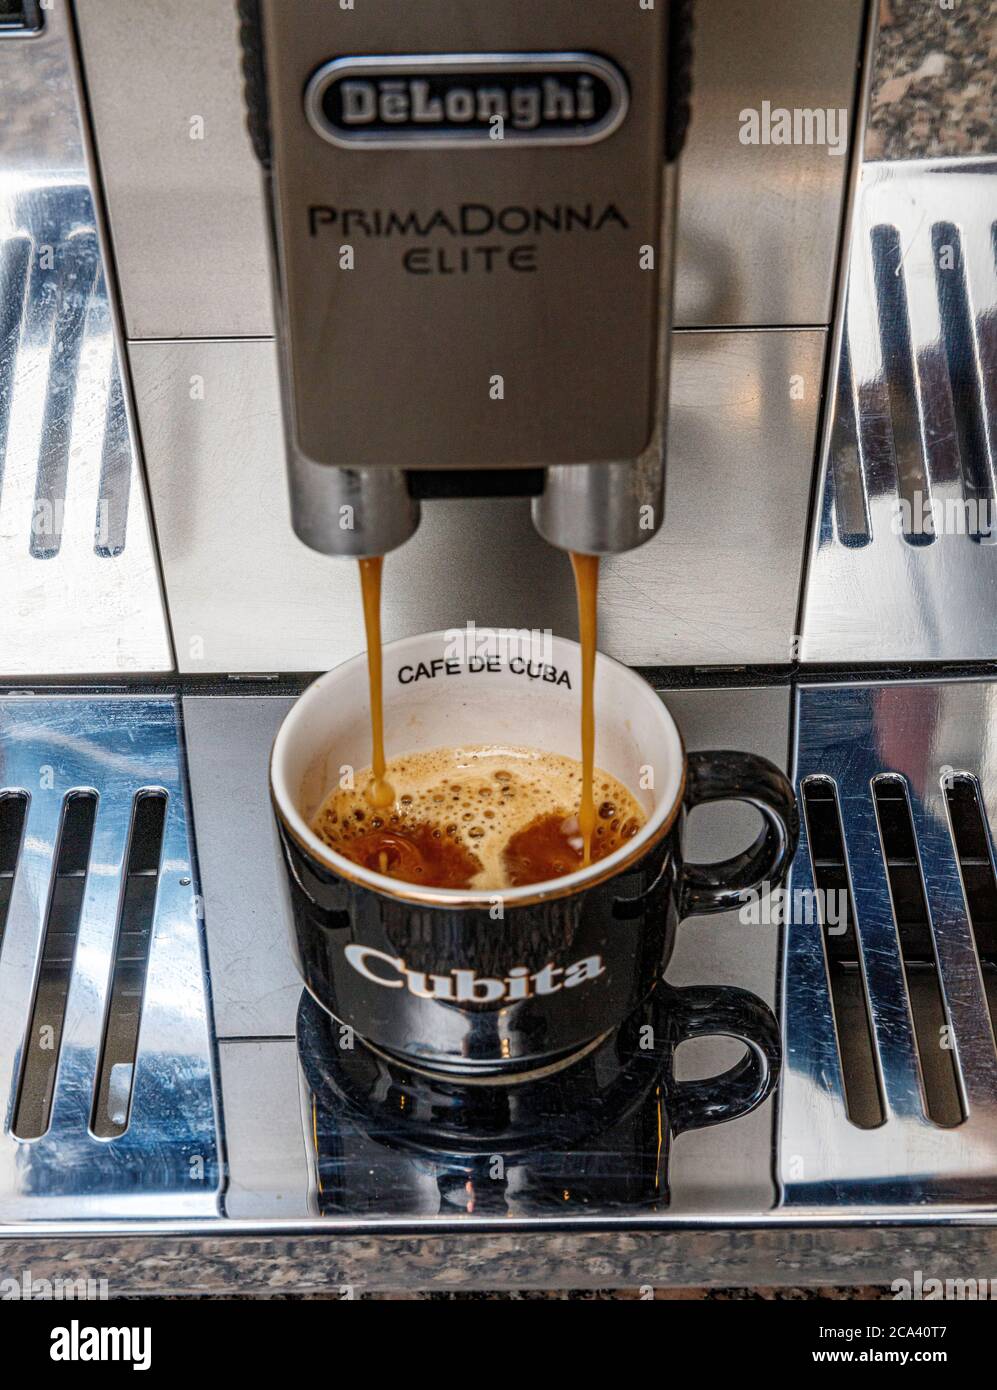 https://c8.alamy.com/comp/2CA40T7/espresso-home-coffee-making-from-delonghi-prima-donna-elite-automatic-bean-to-cup-machine-2CA40T7.jpg